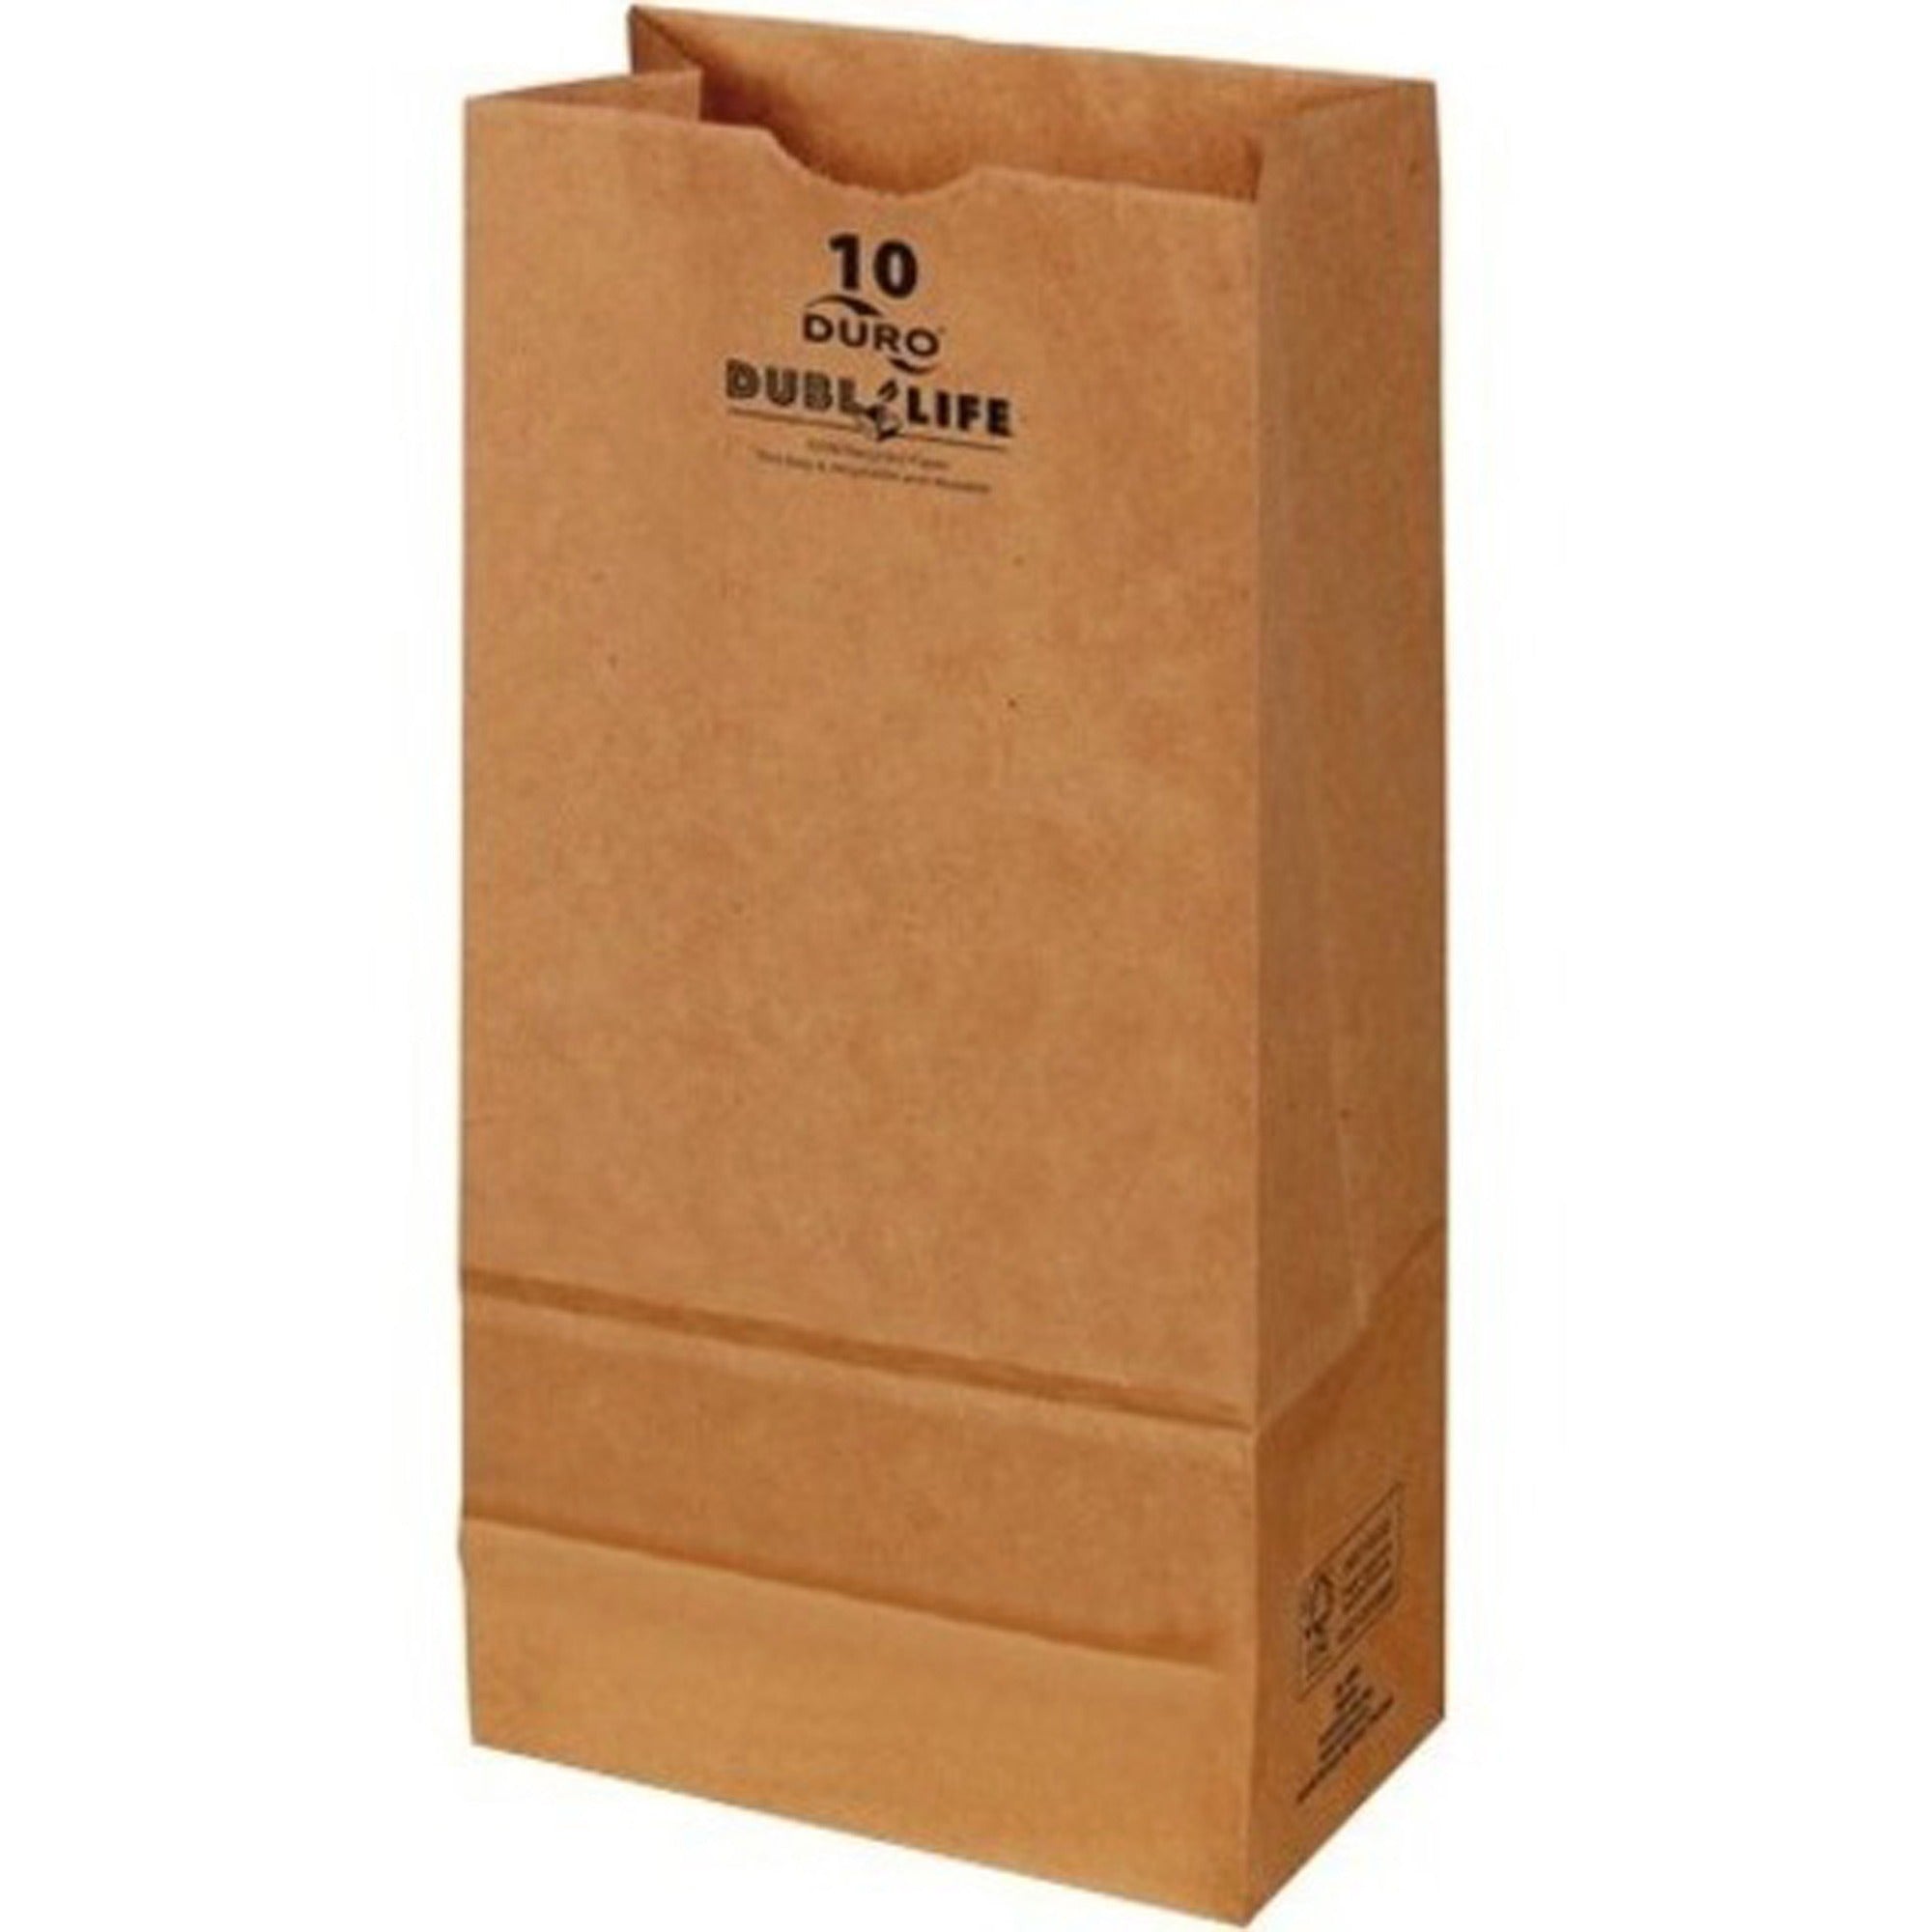 duro-dubl-life-sos-bags-450-width-x-706-length-brown-kraft-paper-1carton-500-per-carton-grocery-food-recycled_dob18412 - 1